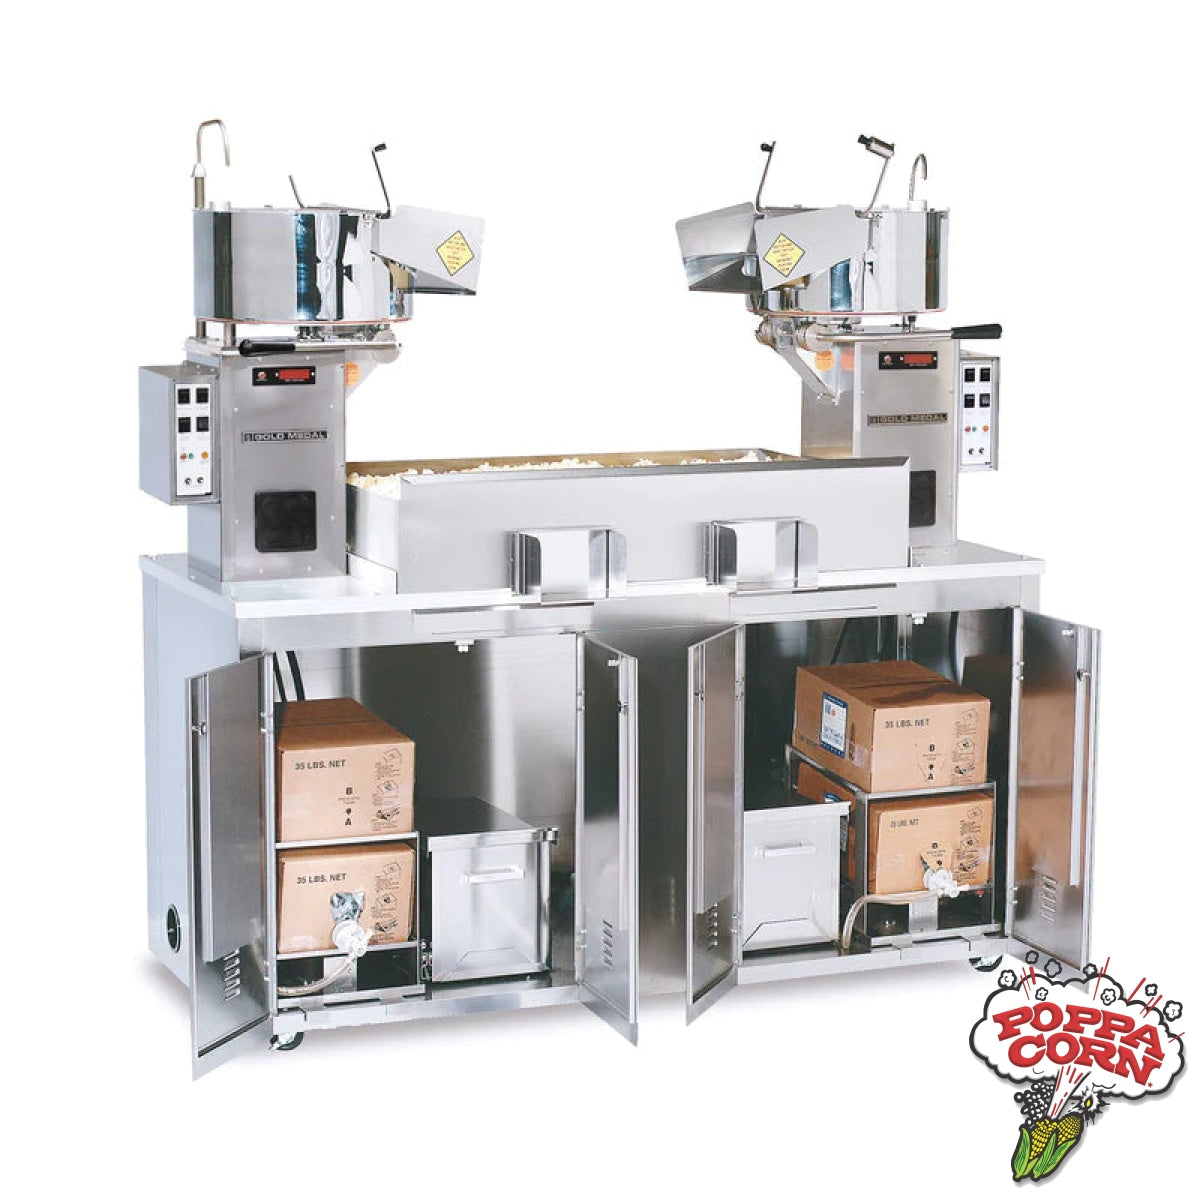 Twin Maxi Popping Plant Popcorn Machine - GM2233-00-100 - Poppa Corn Corp